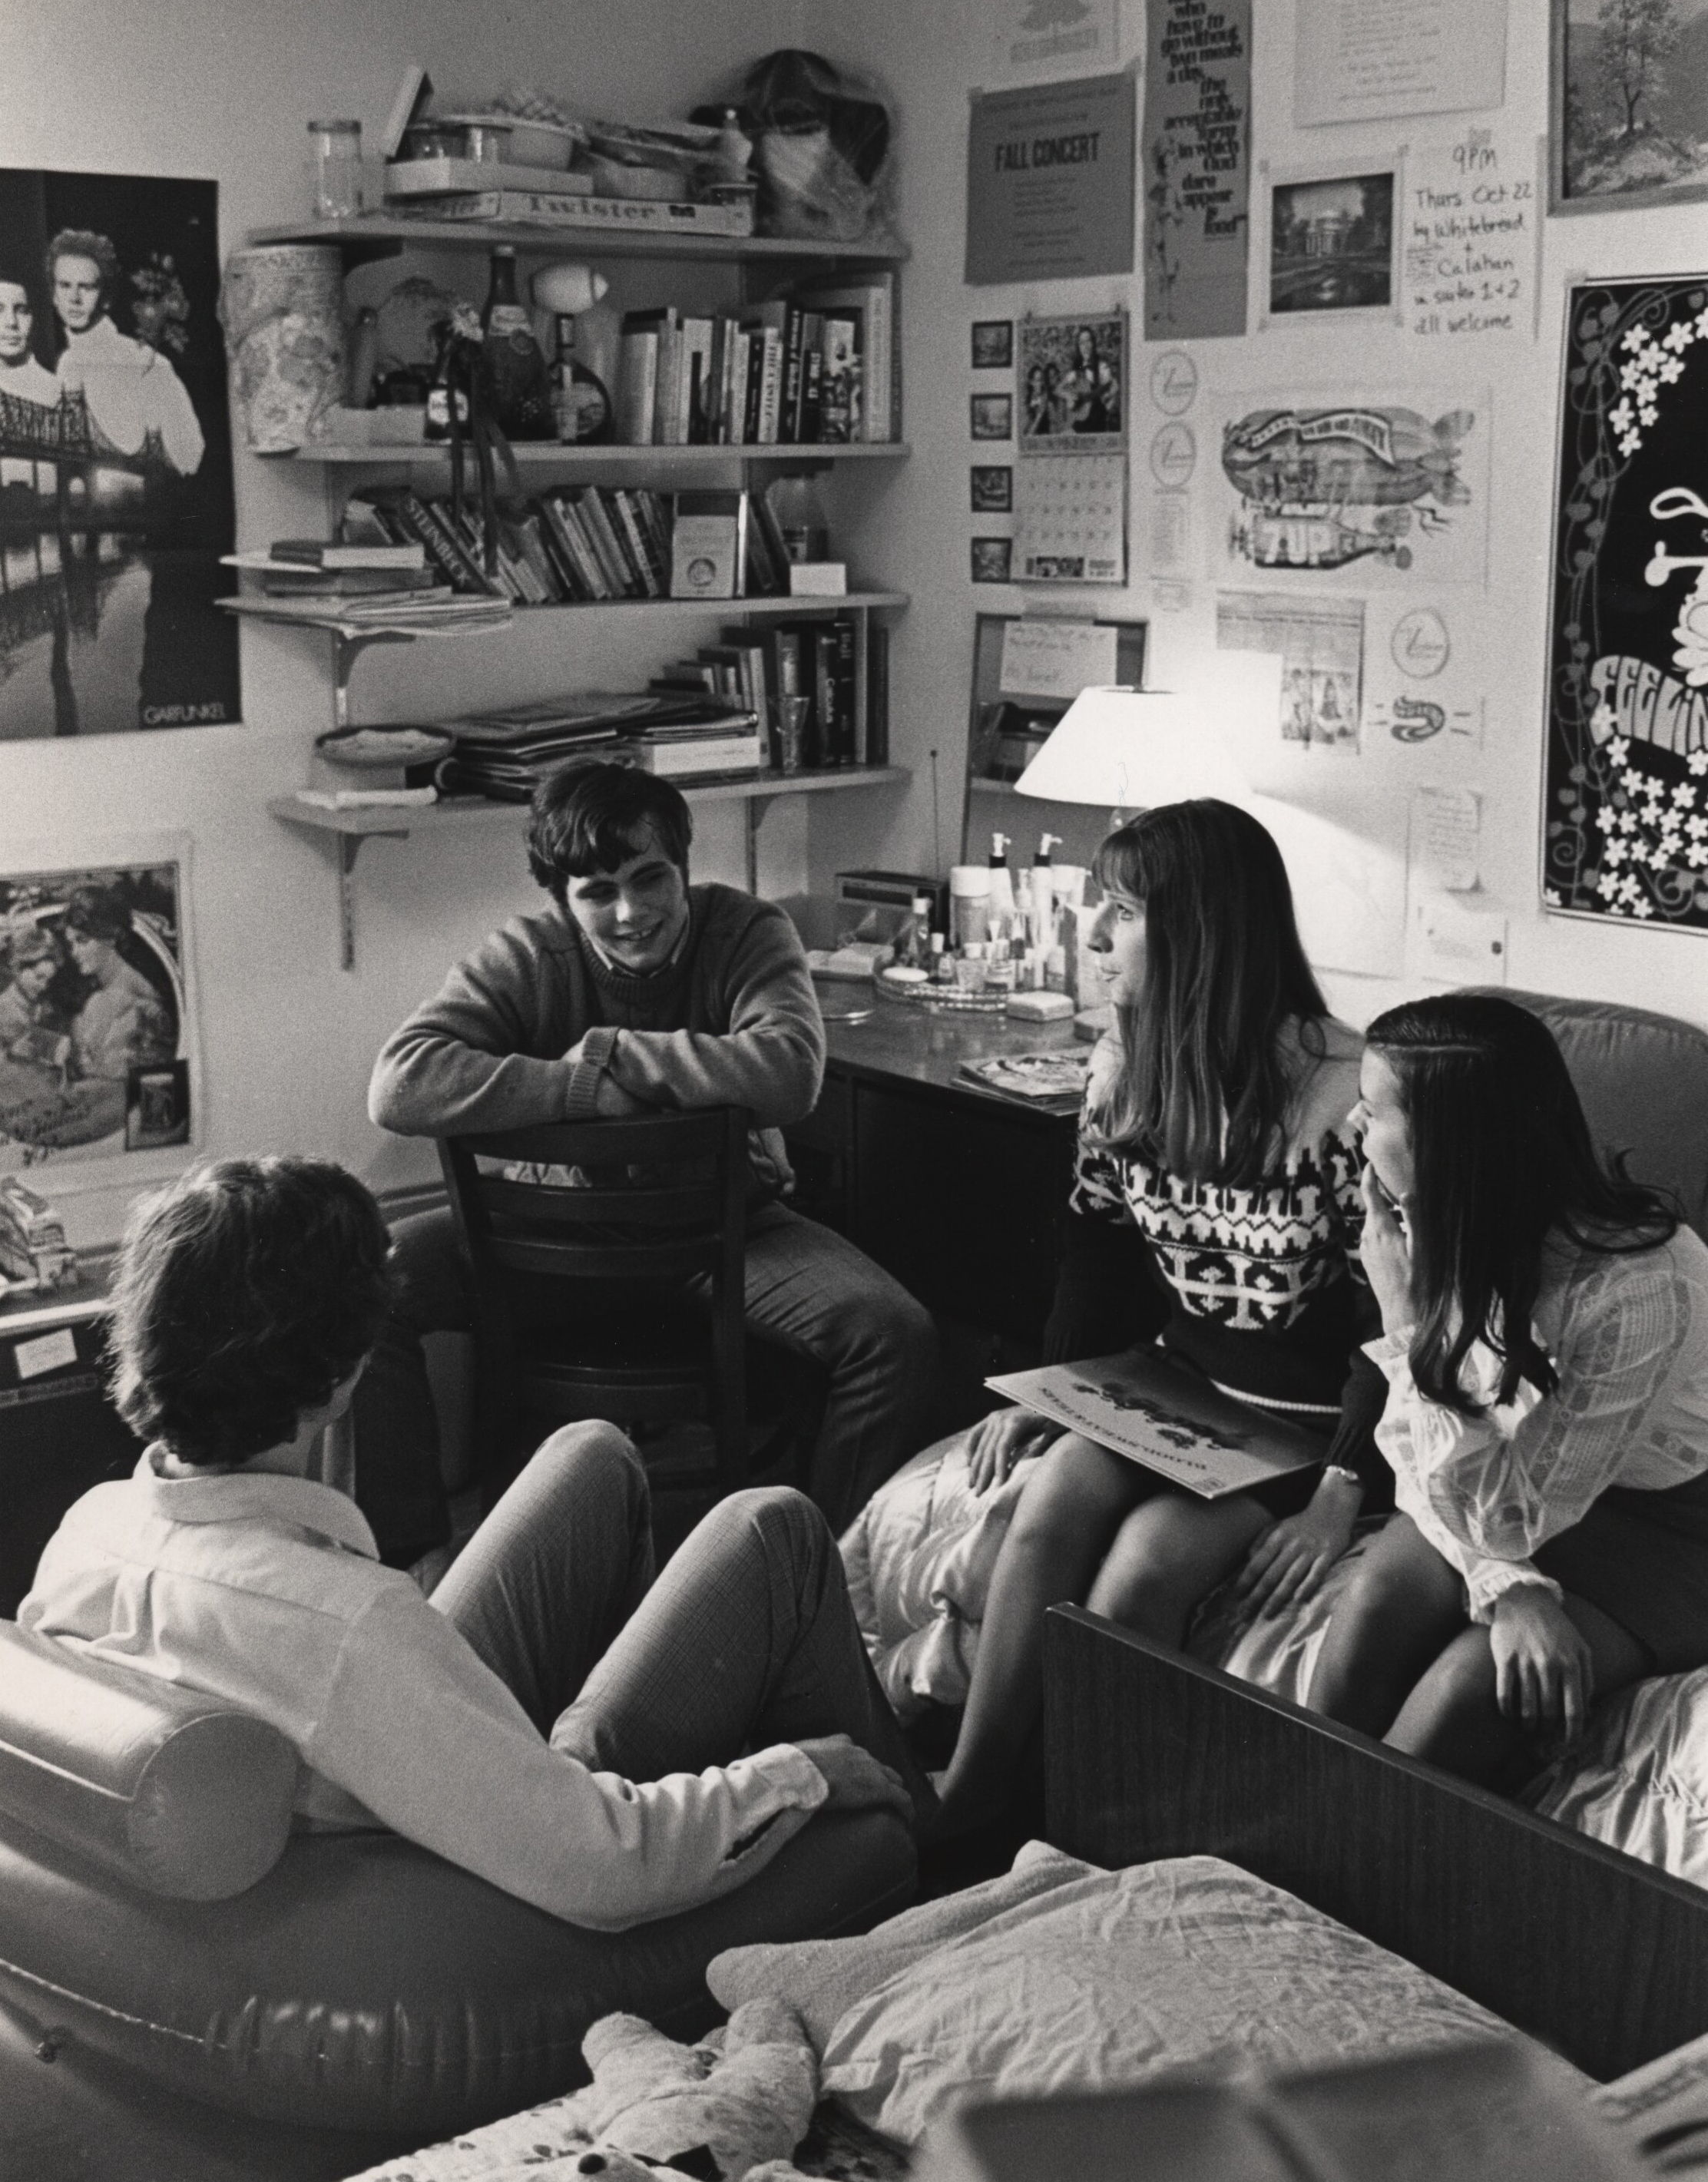 1971 Students Dorm Room